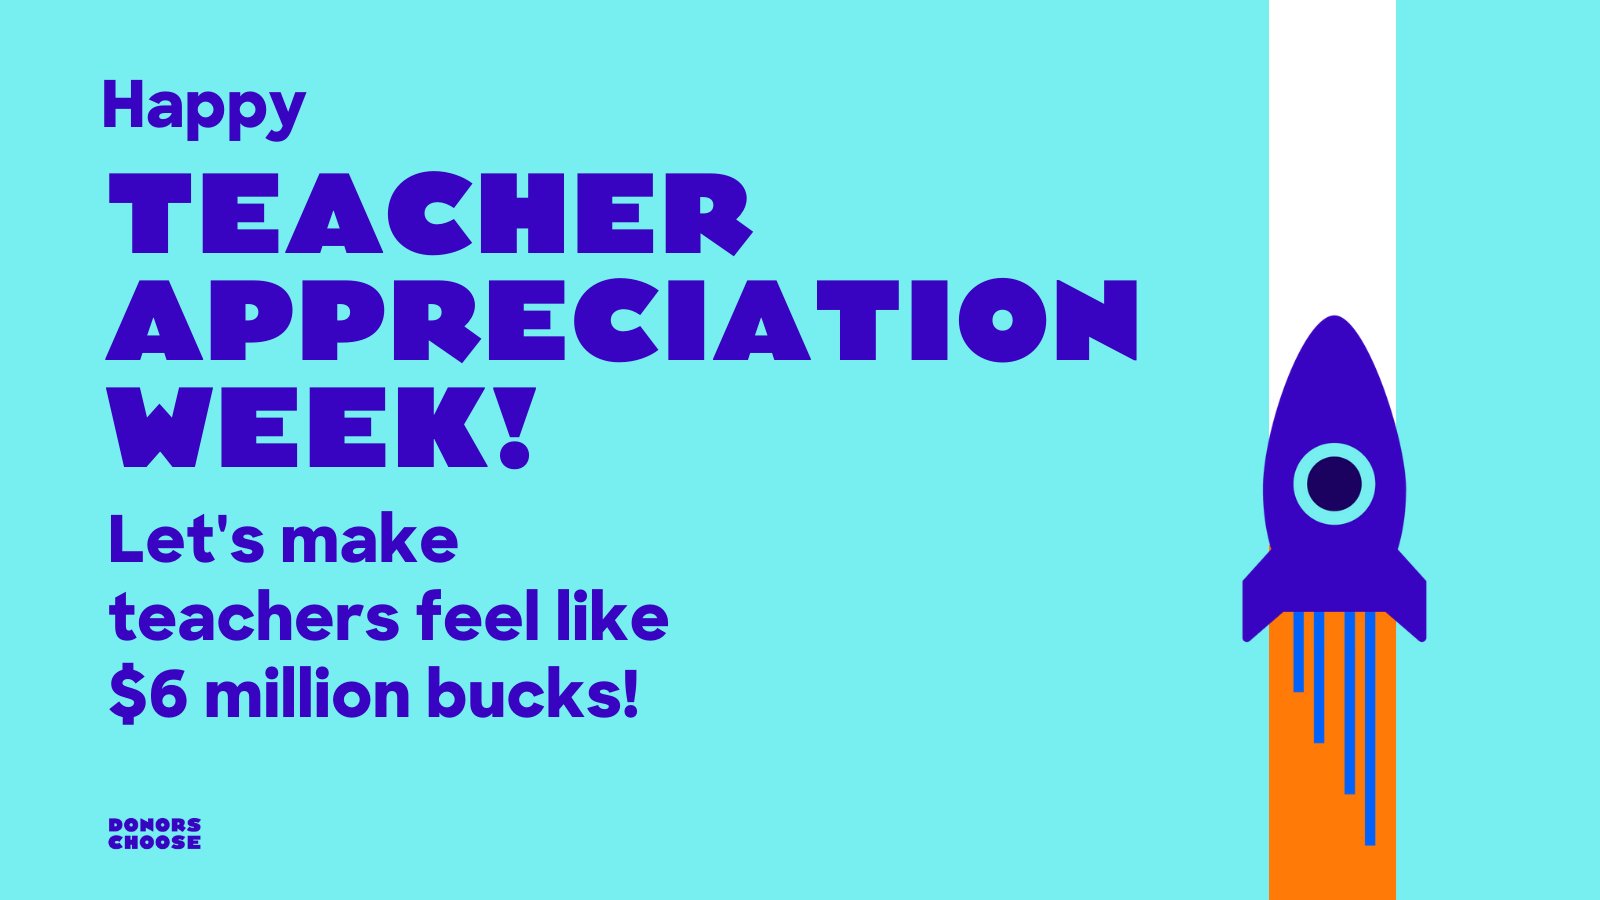 DonorsChoose on Twitter "Teachers, for TeacherAppreciationWeek we’ve